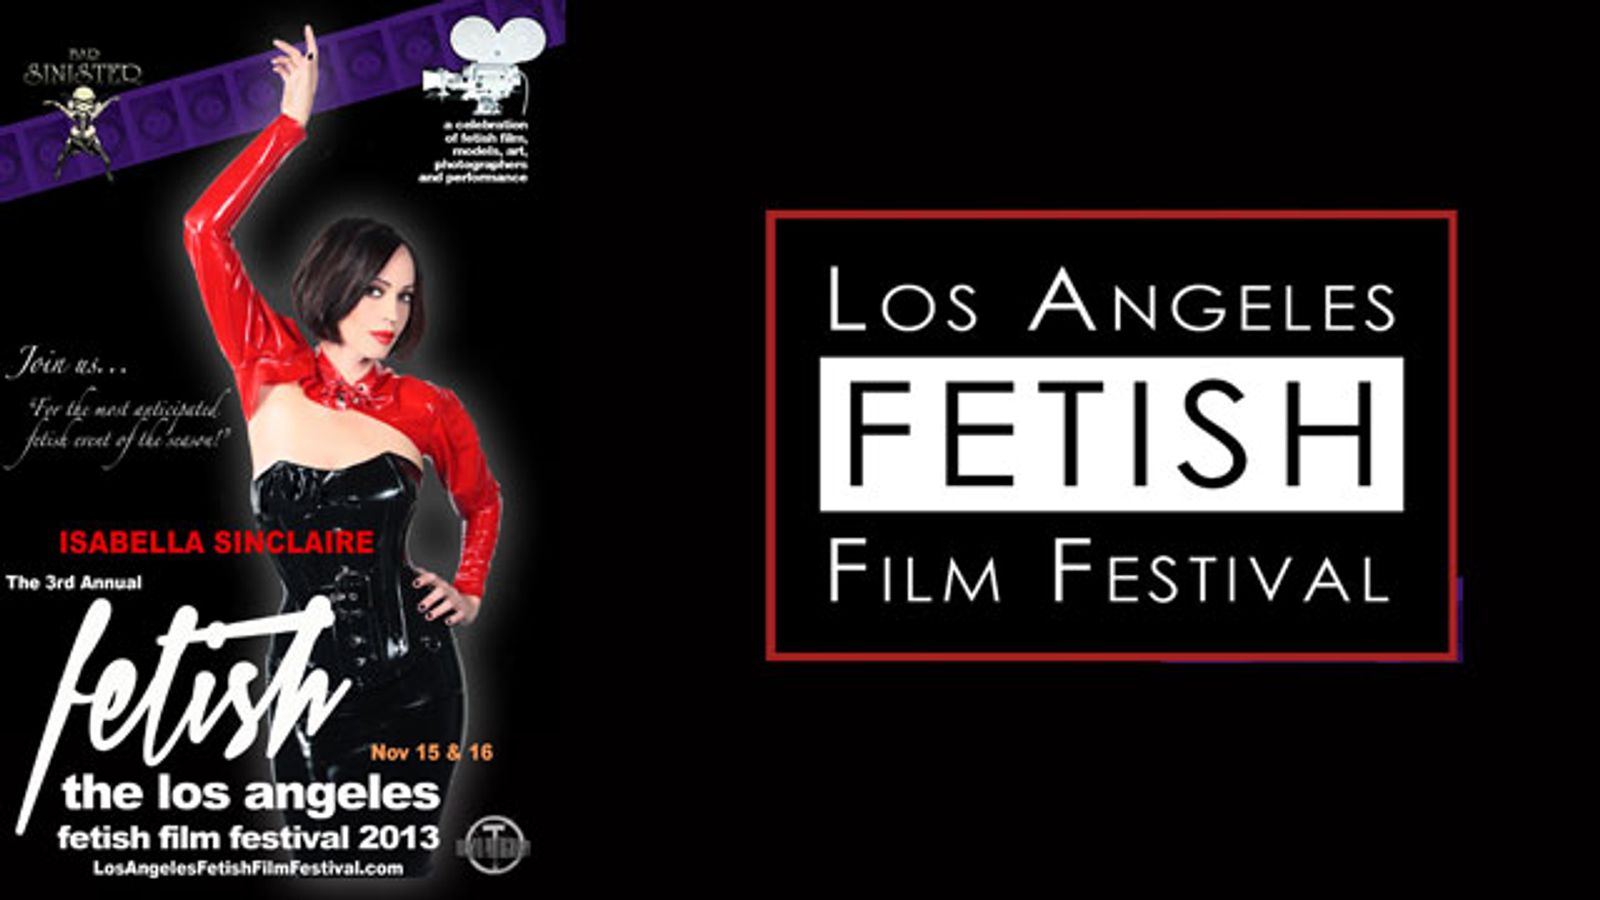 3rd Annual LA Fetish Film Festival Set for Nov. 15 & 16